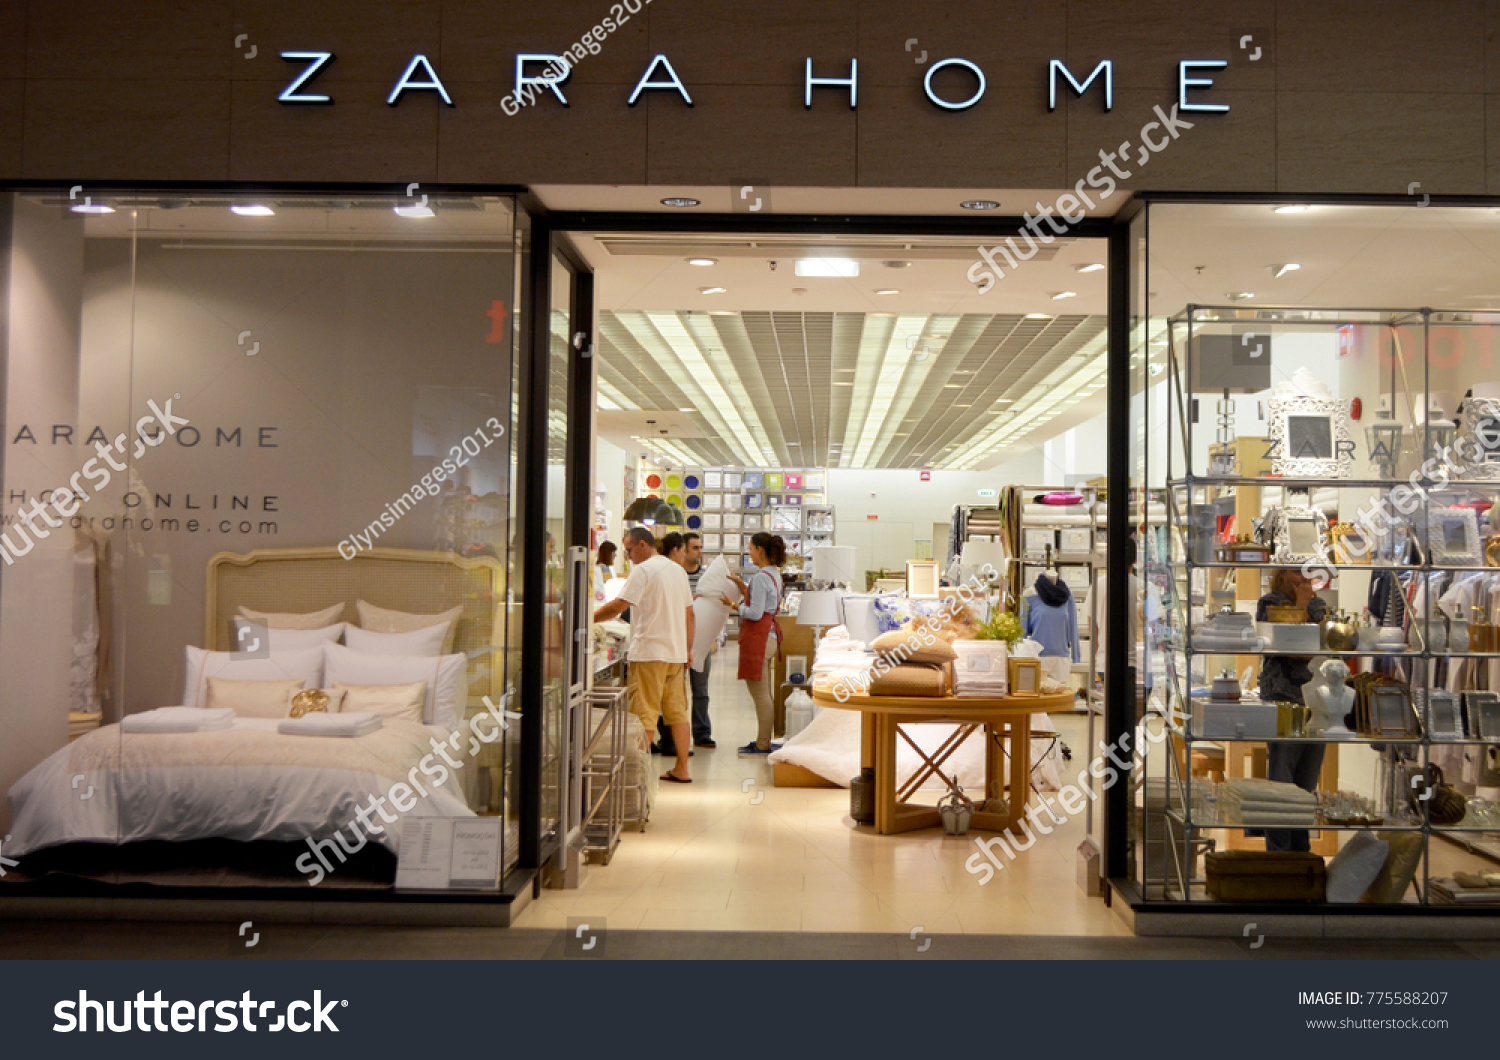 zara online home store